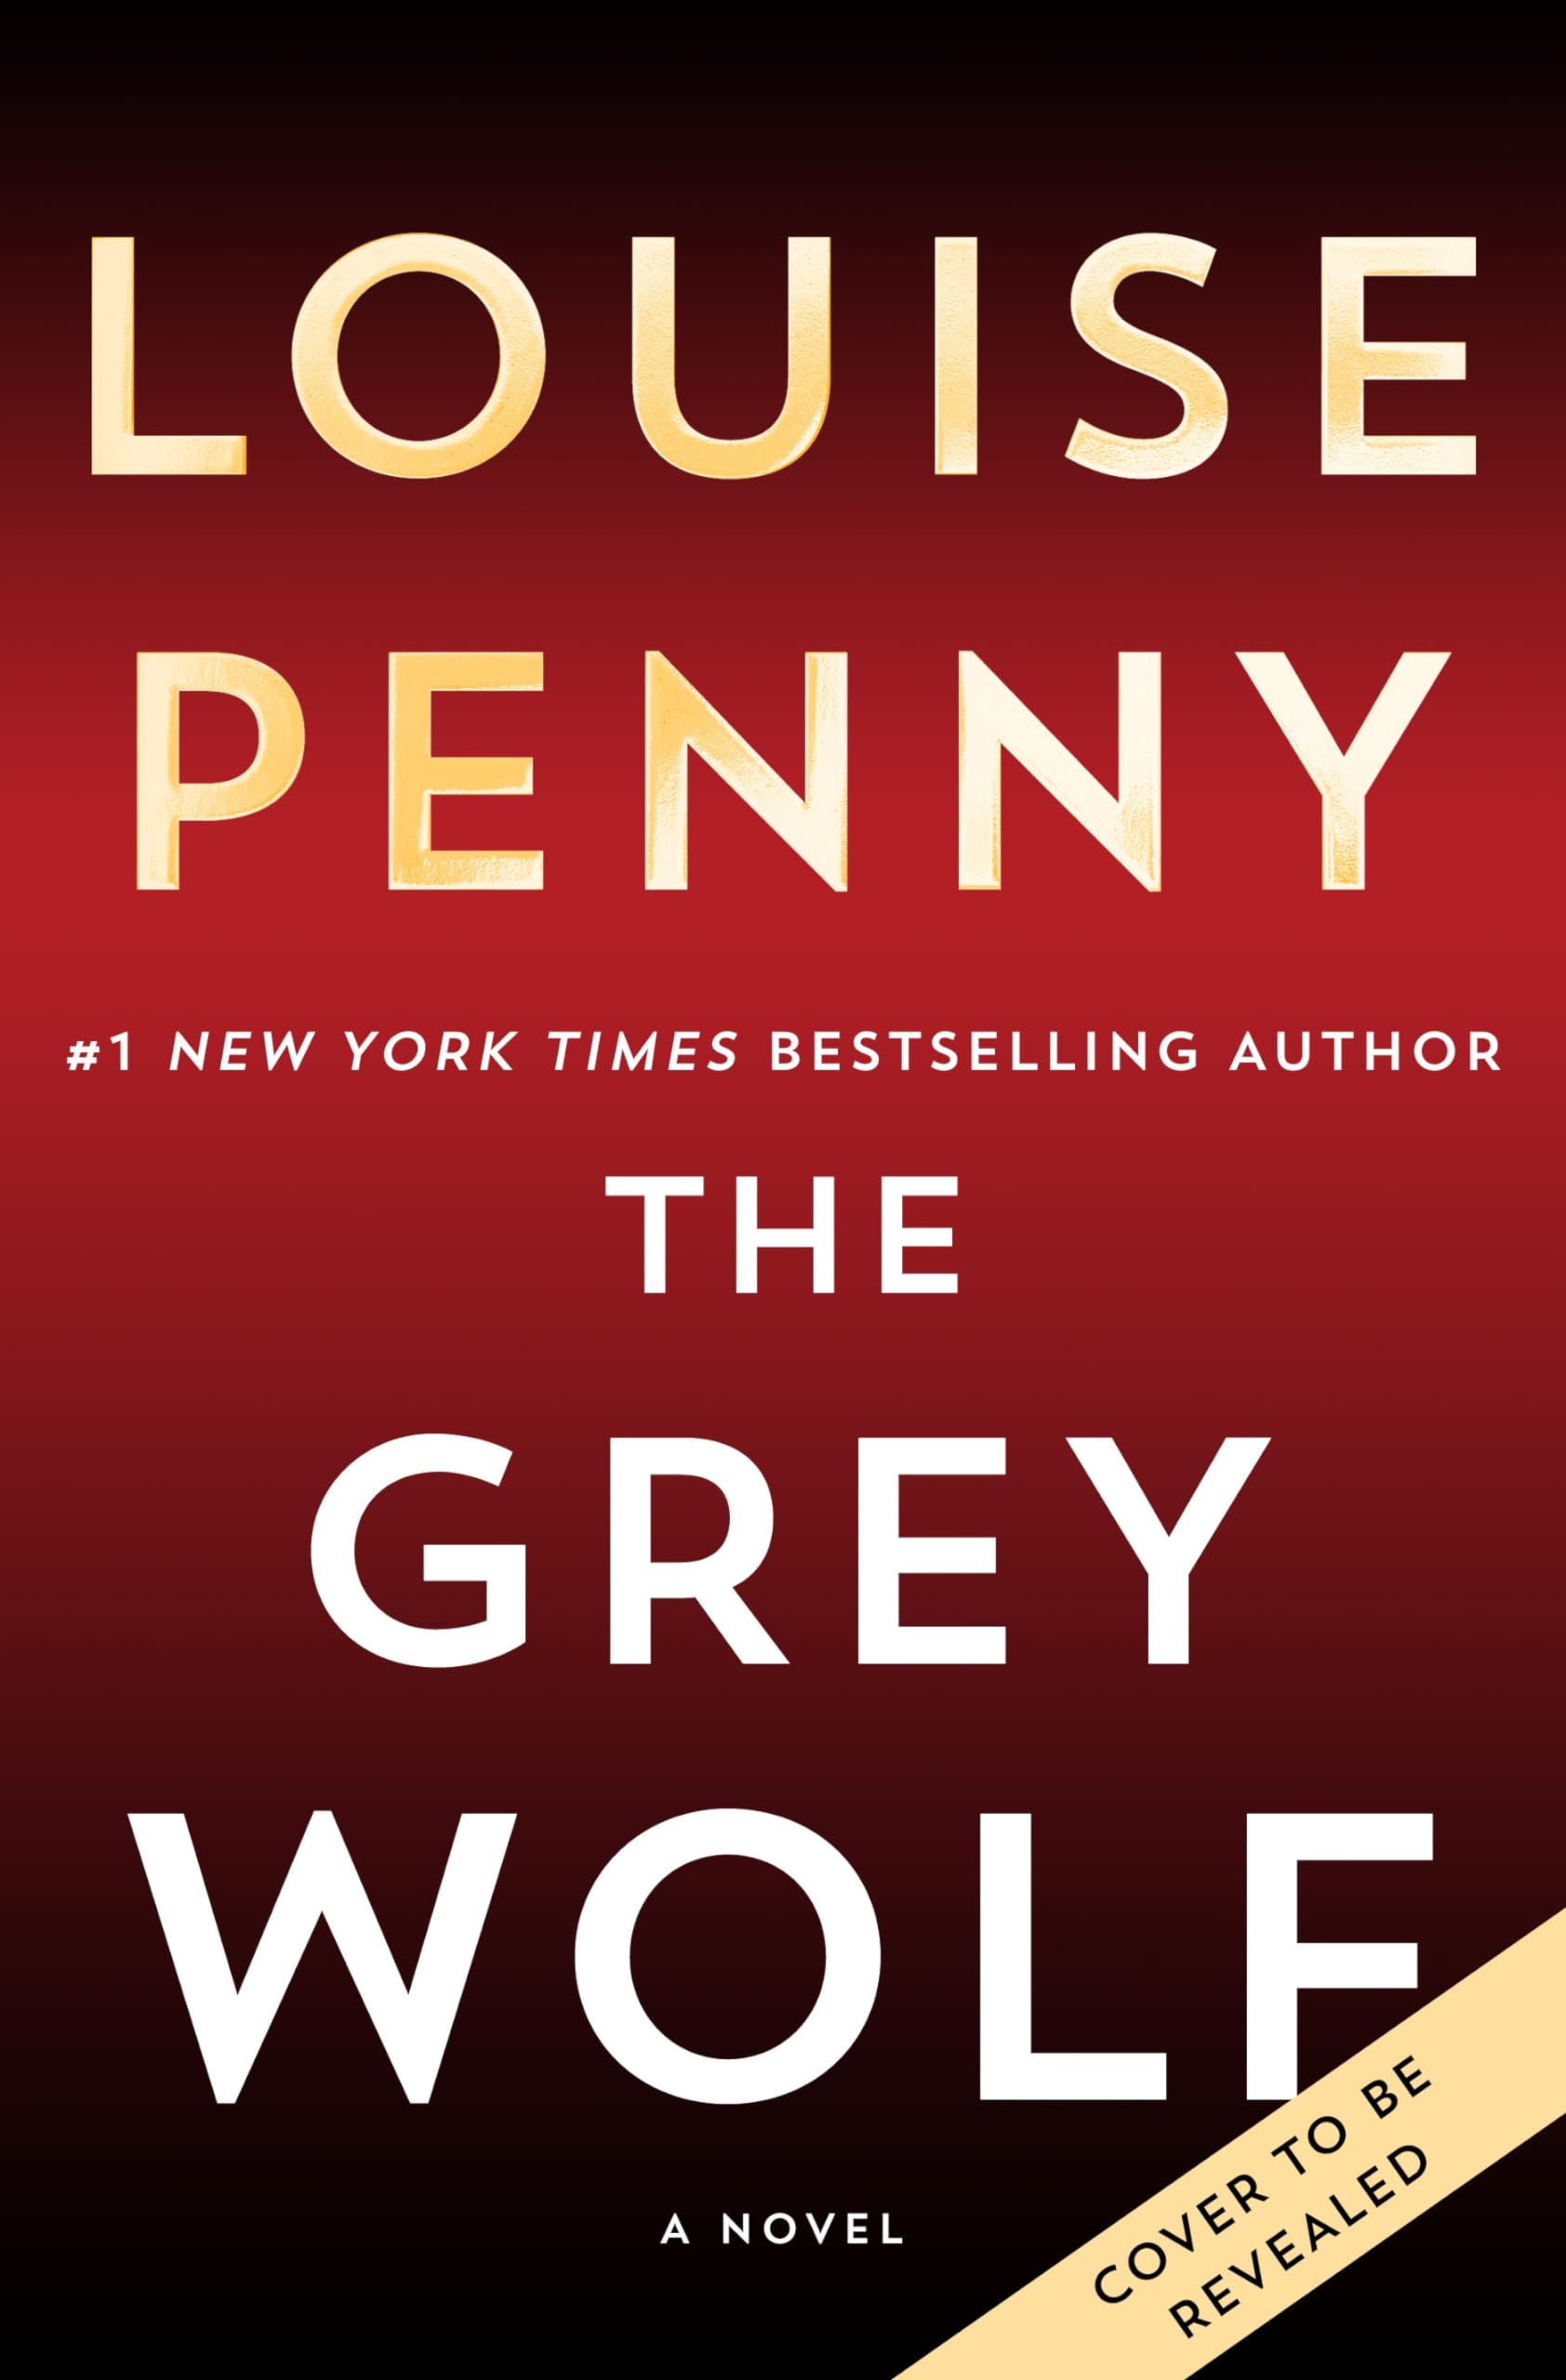 The Grey Wolf: A Novel (Chief Inspector Gamache Novel Book 19)